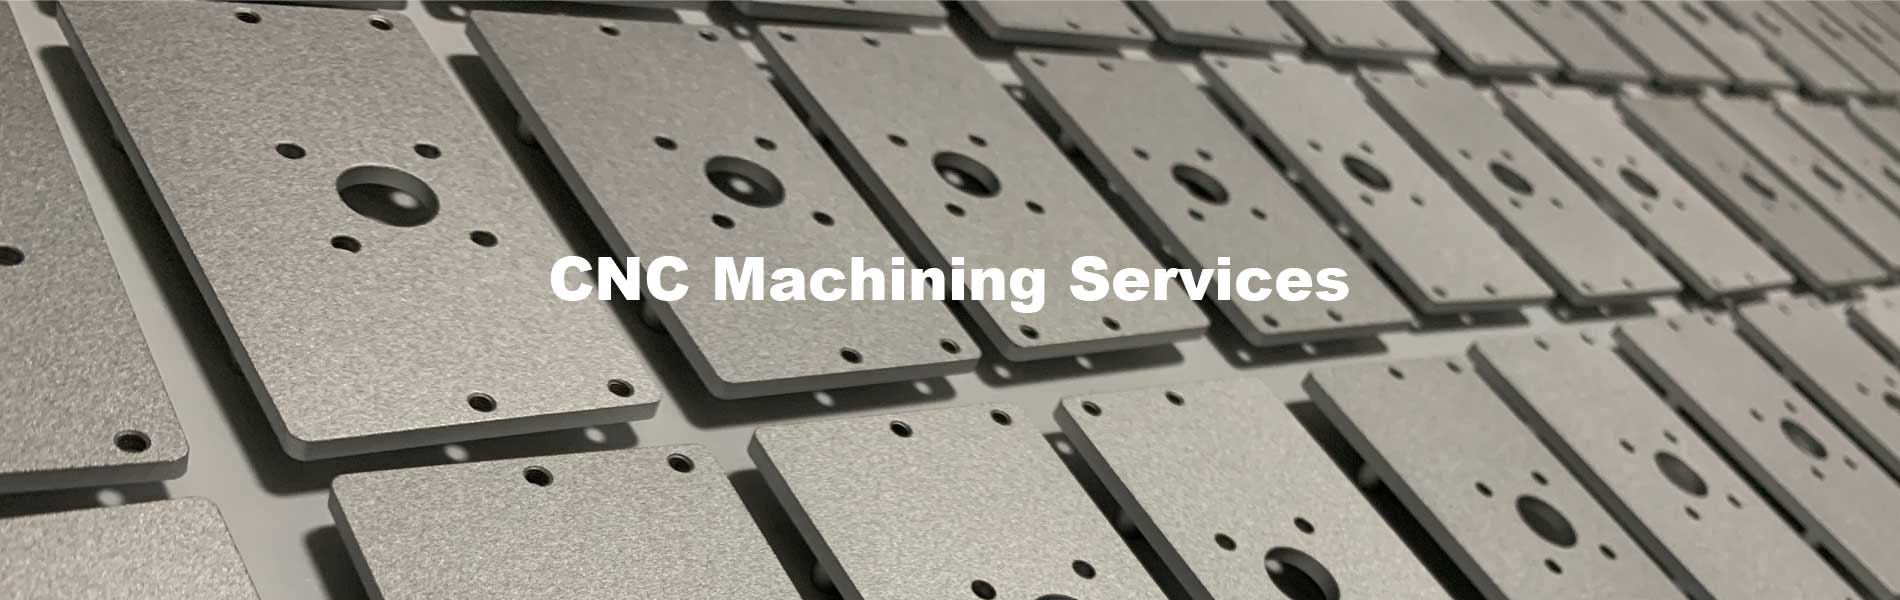 cnc machining services china shop